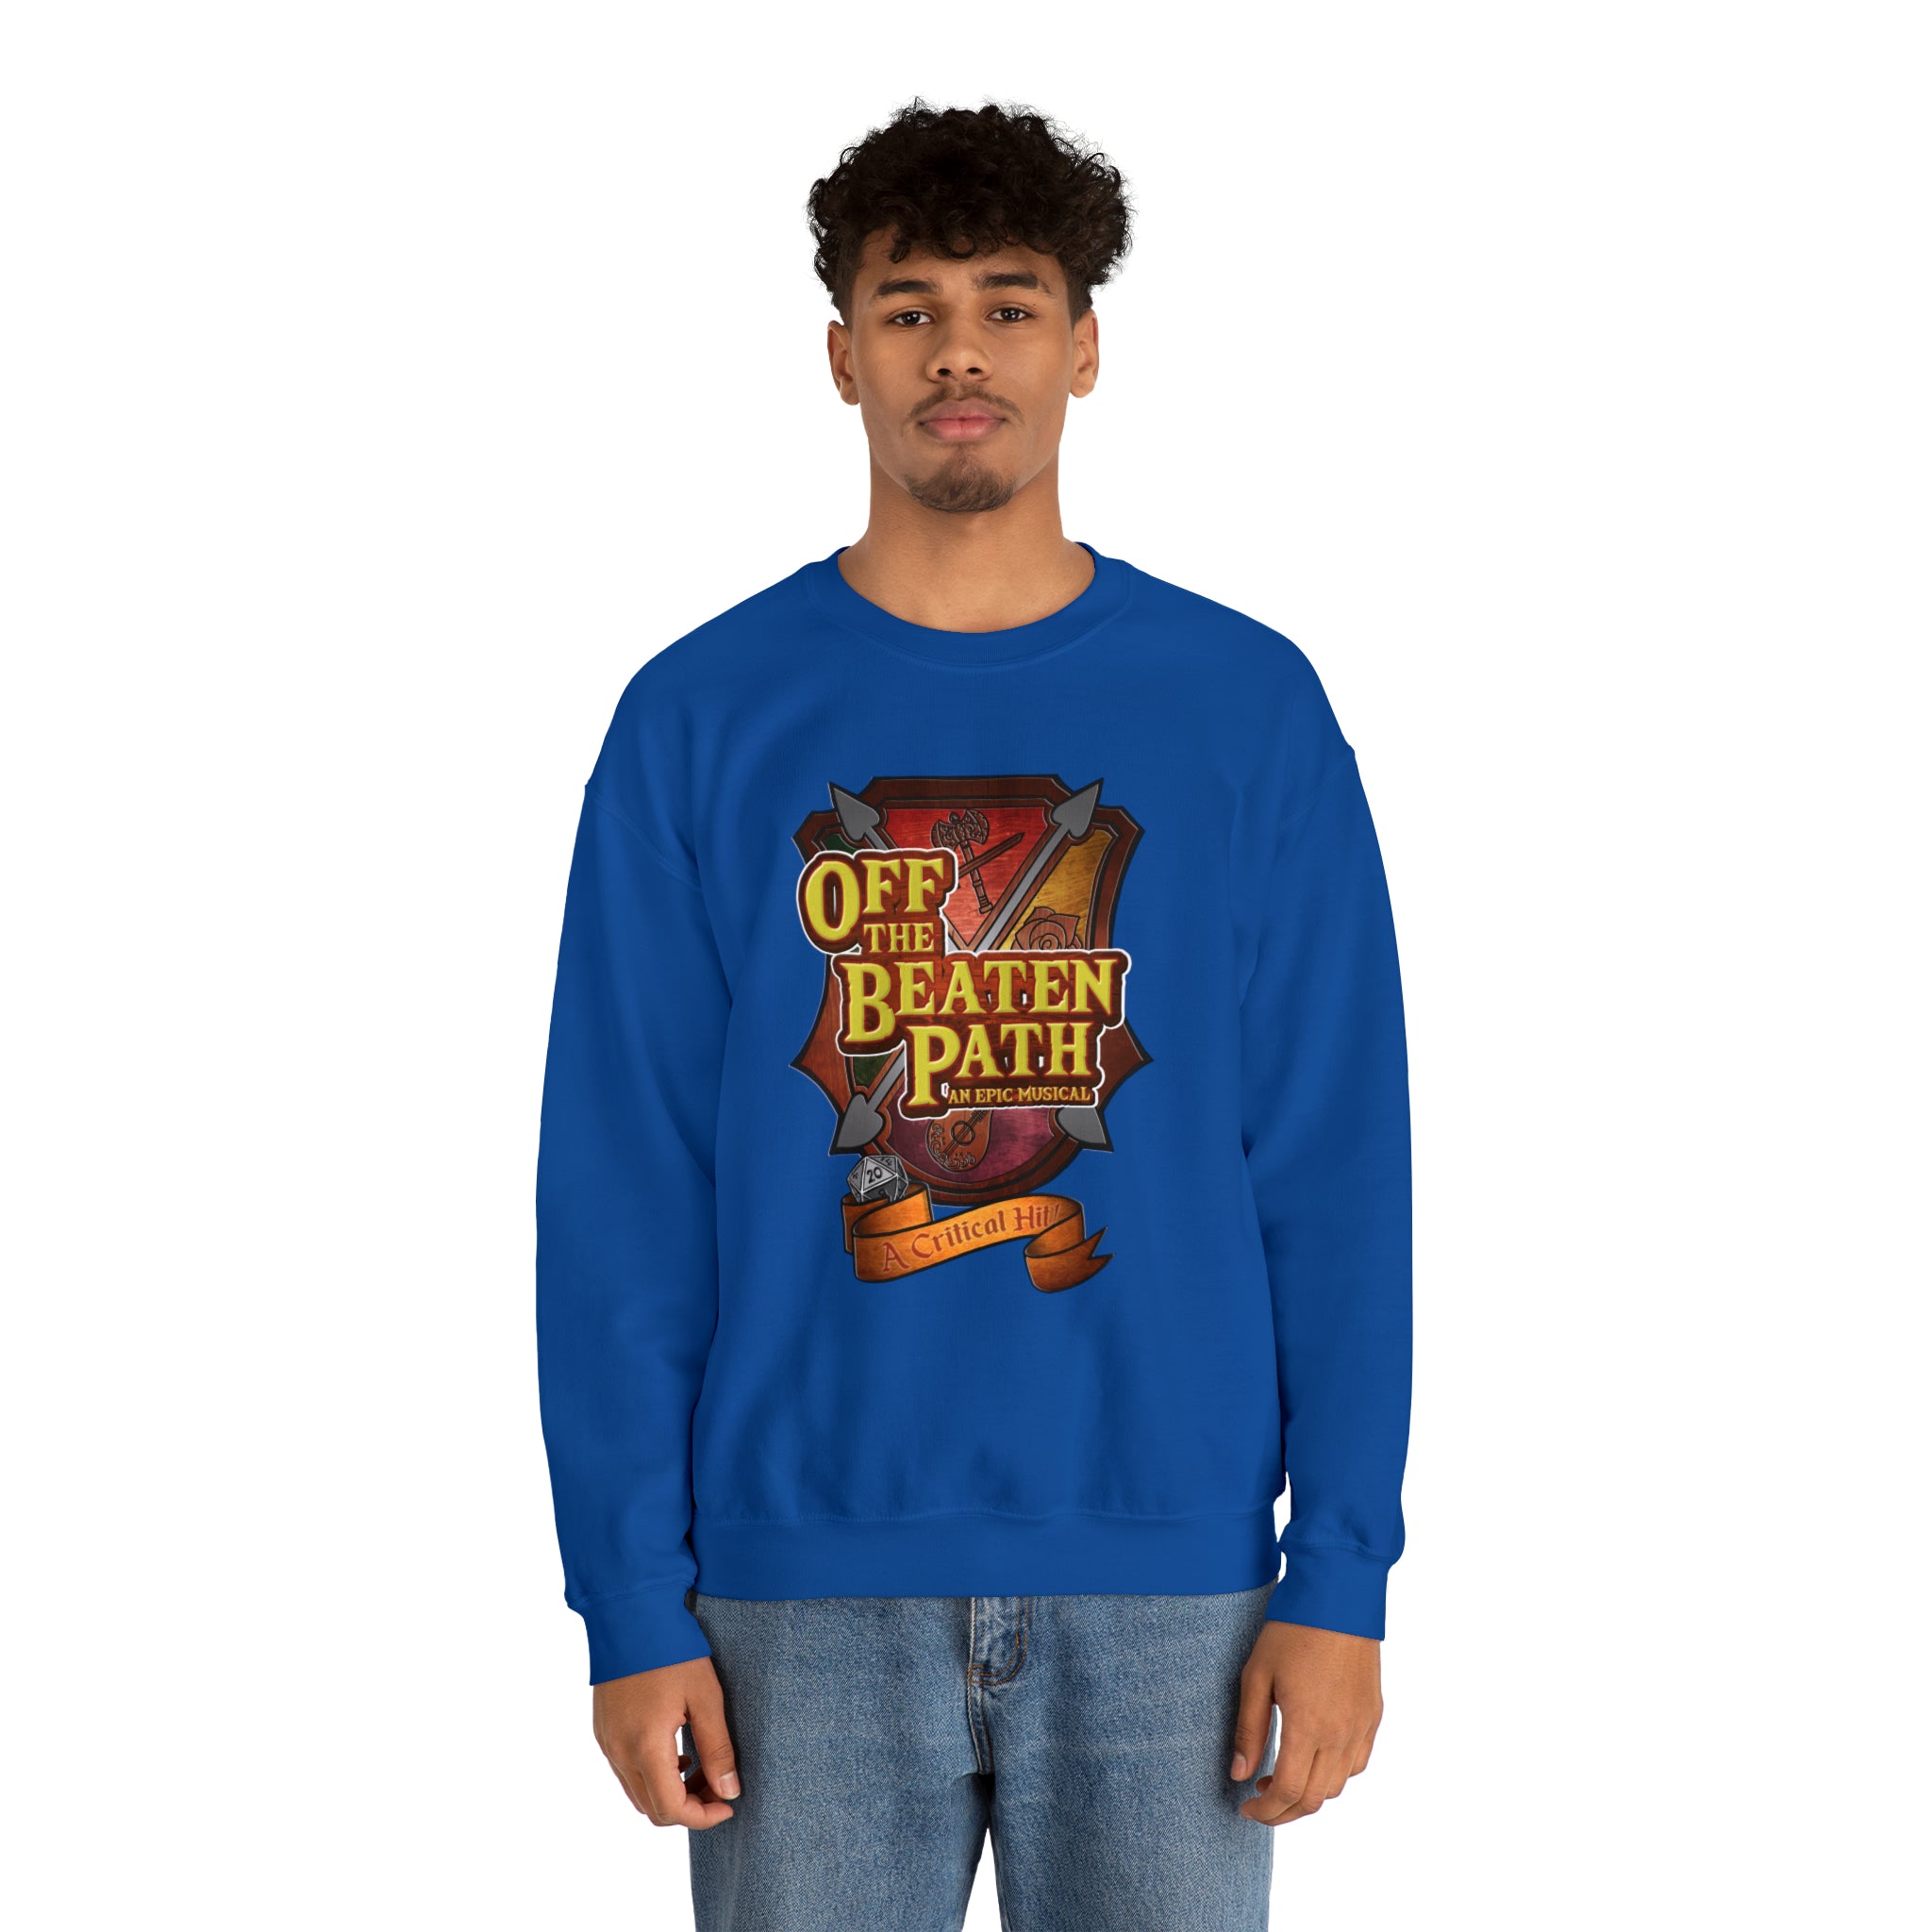 OBP Crest Crewneck Sweatshirt